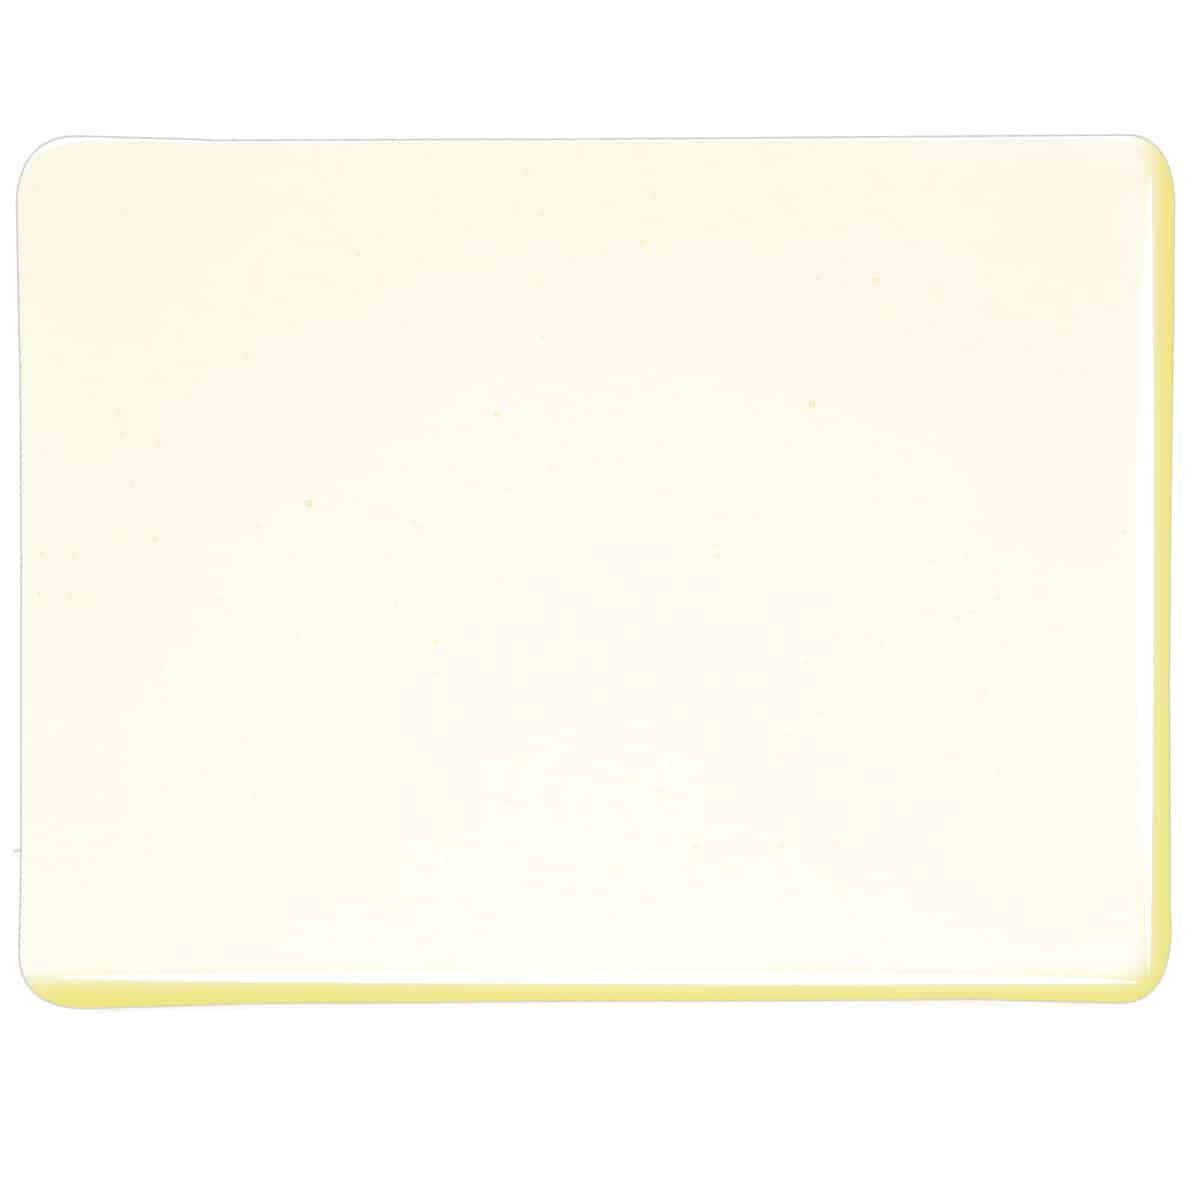 001920 Lemon Tint transparent sheet glass swatch